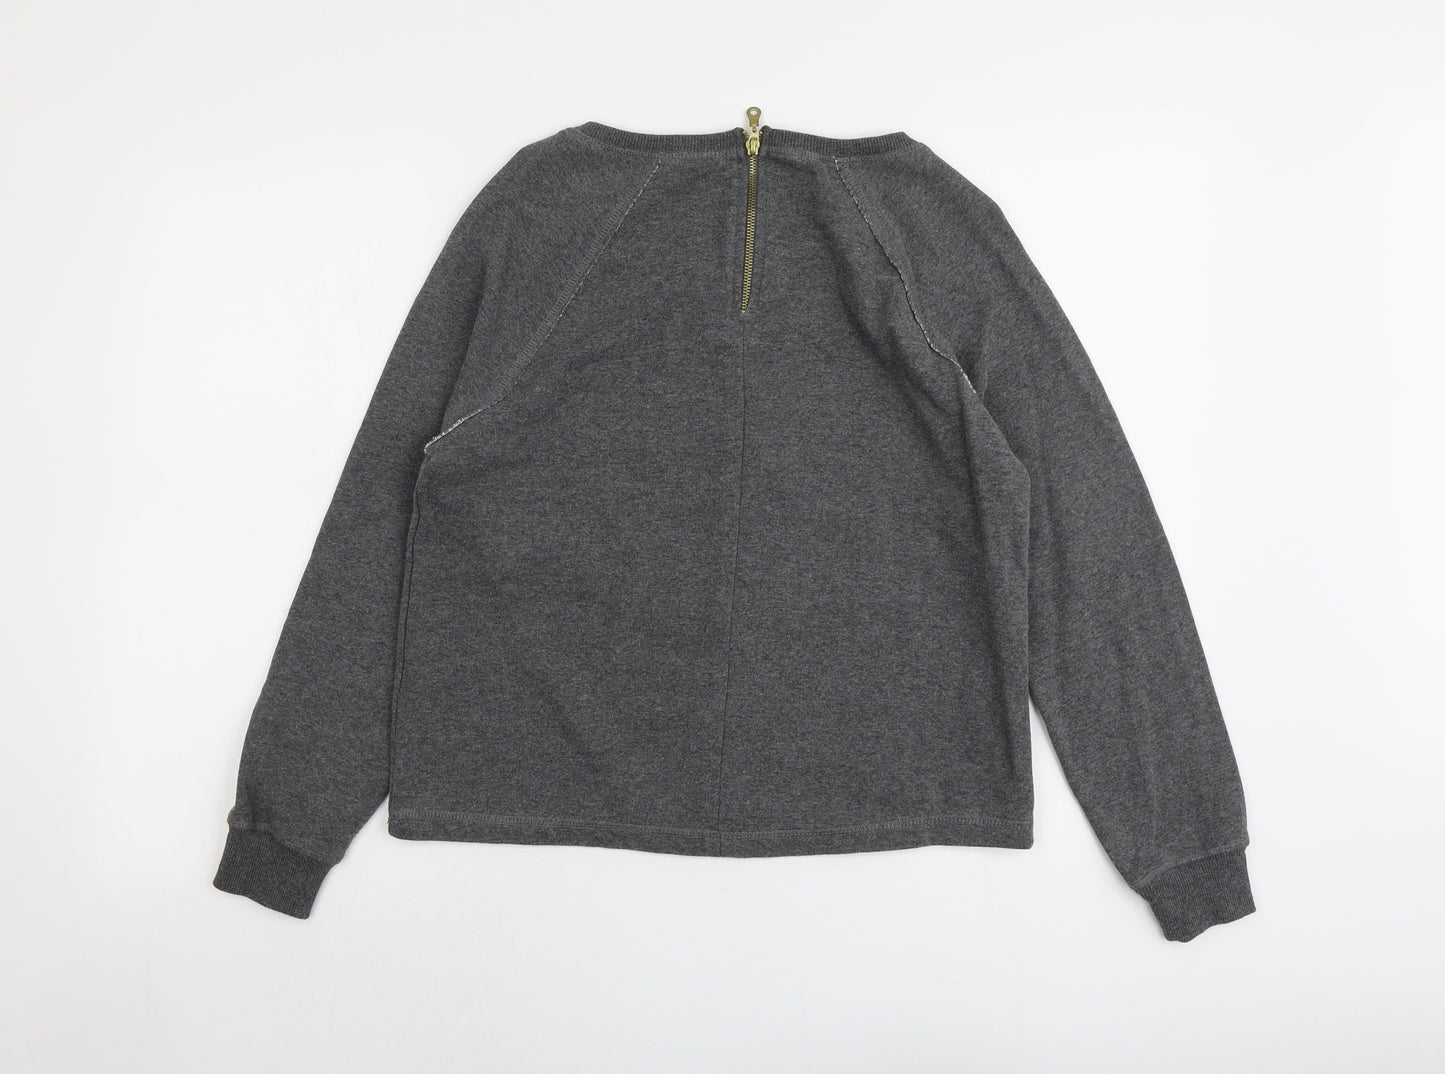 Gina Tricot Womens Grey Cotton Pullover Sweatshirt Size M Zip - American Flag